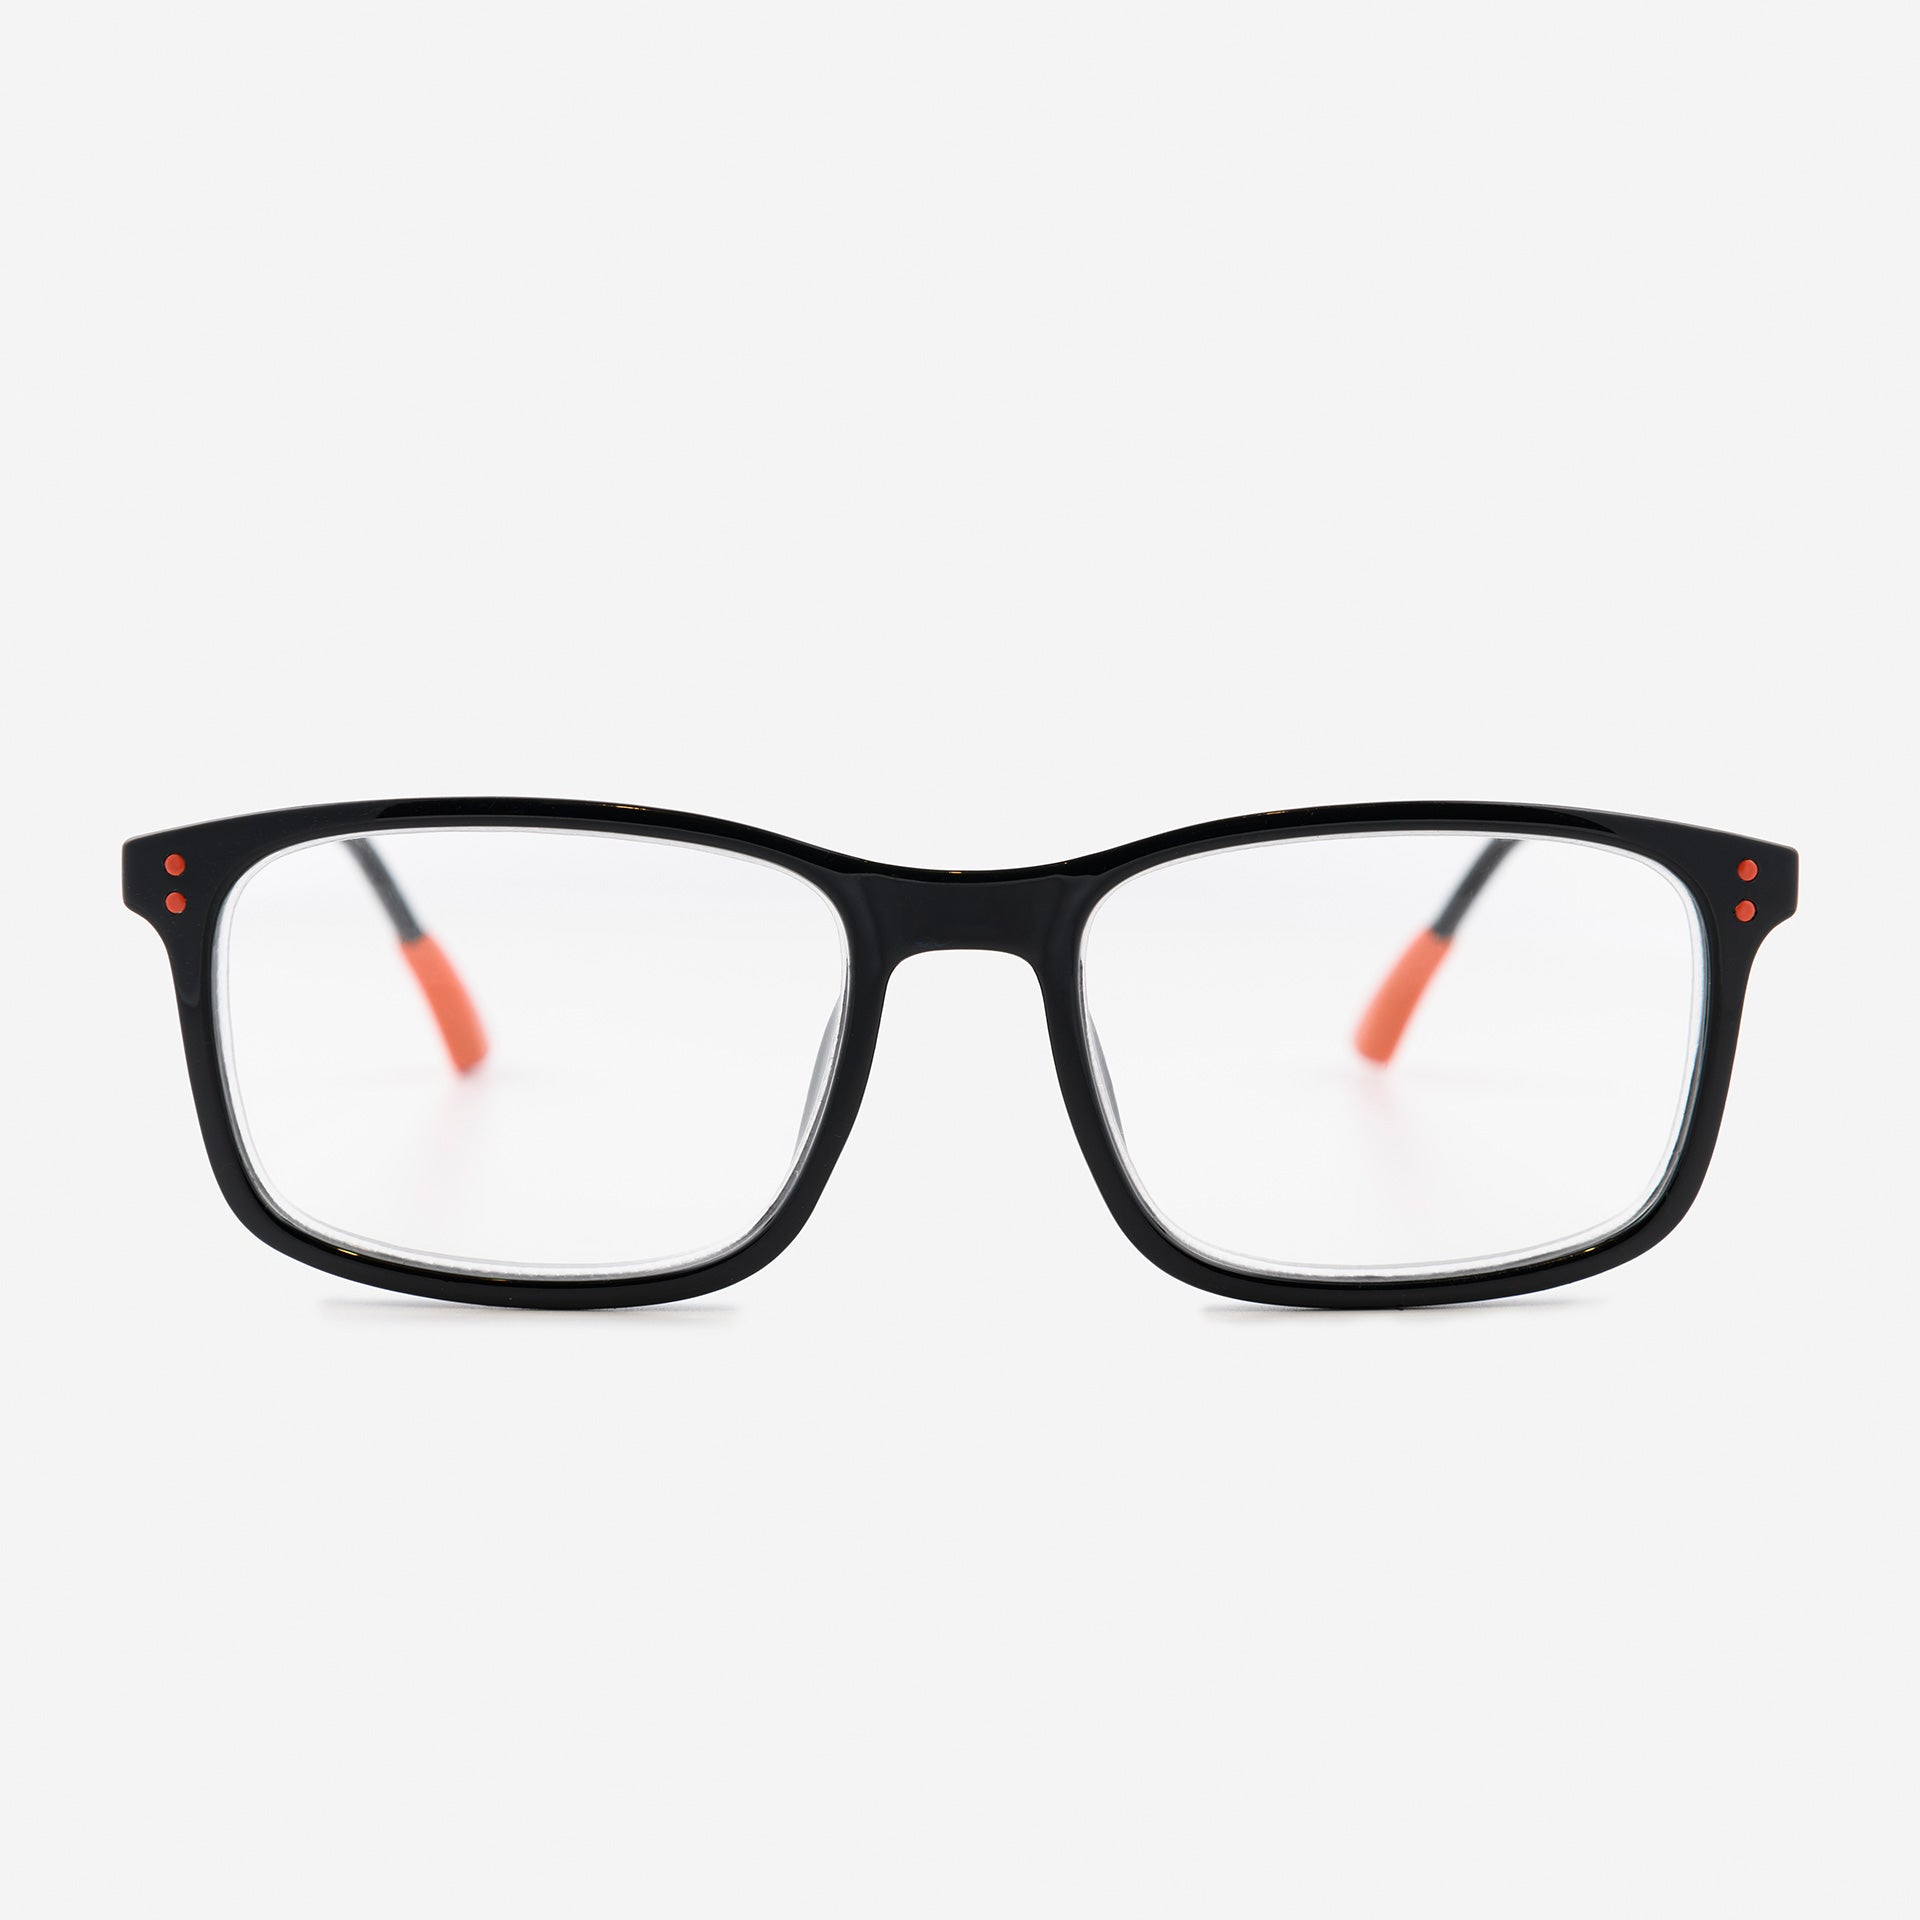 Black and orange square reading glasses